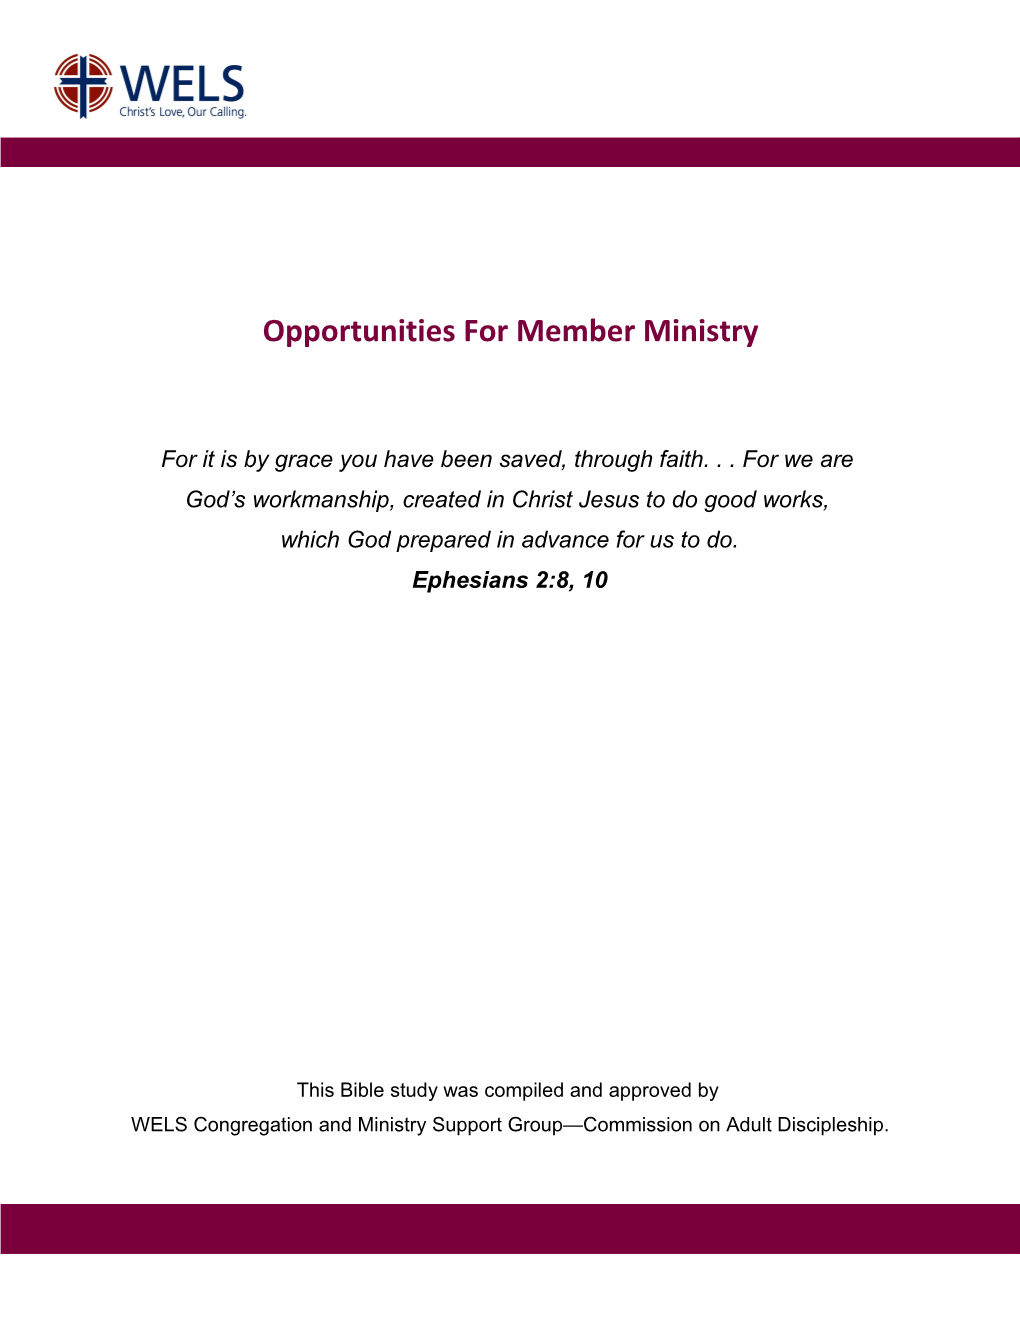 Opportunities for Member Ministry